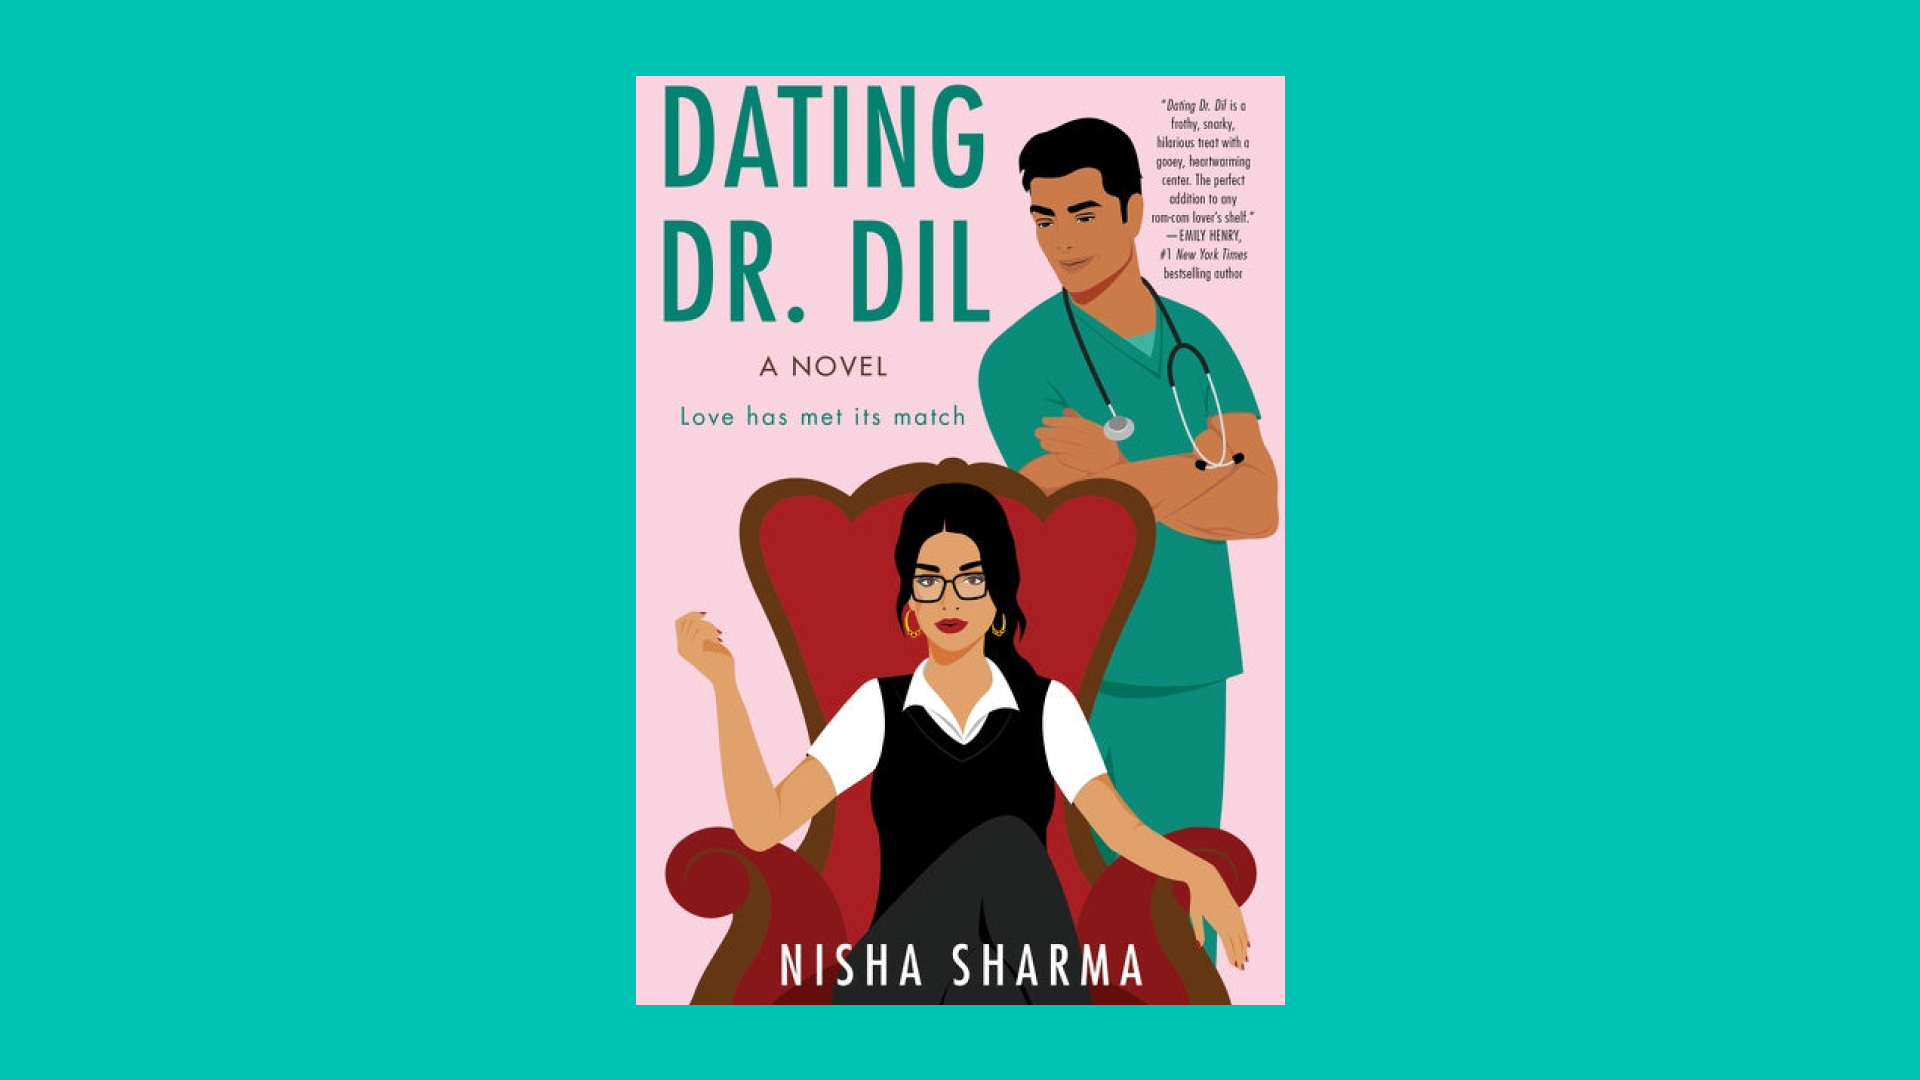 “Dating Dr. Dil” by Nisha Sharma